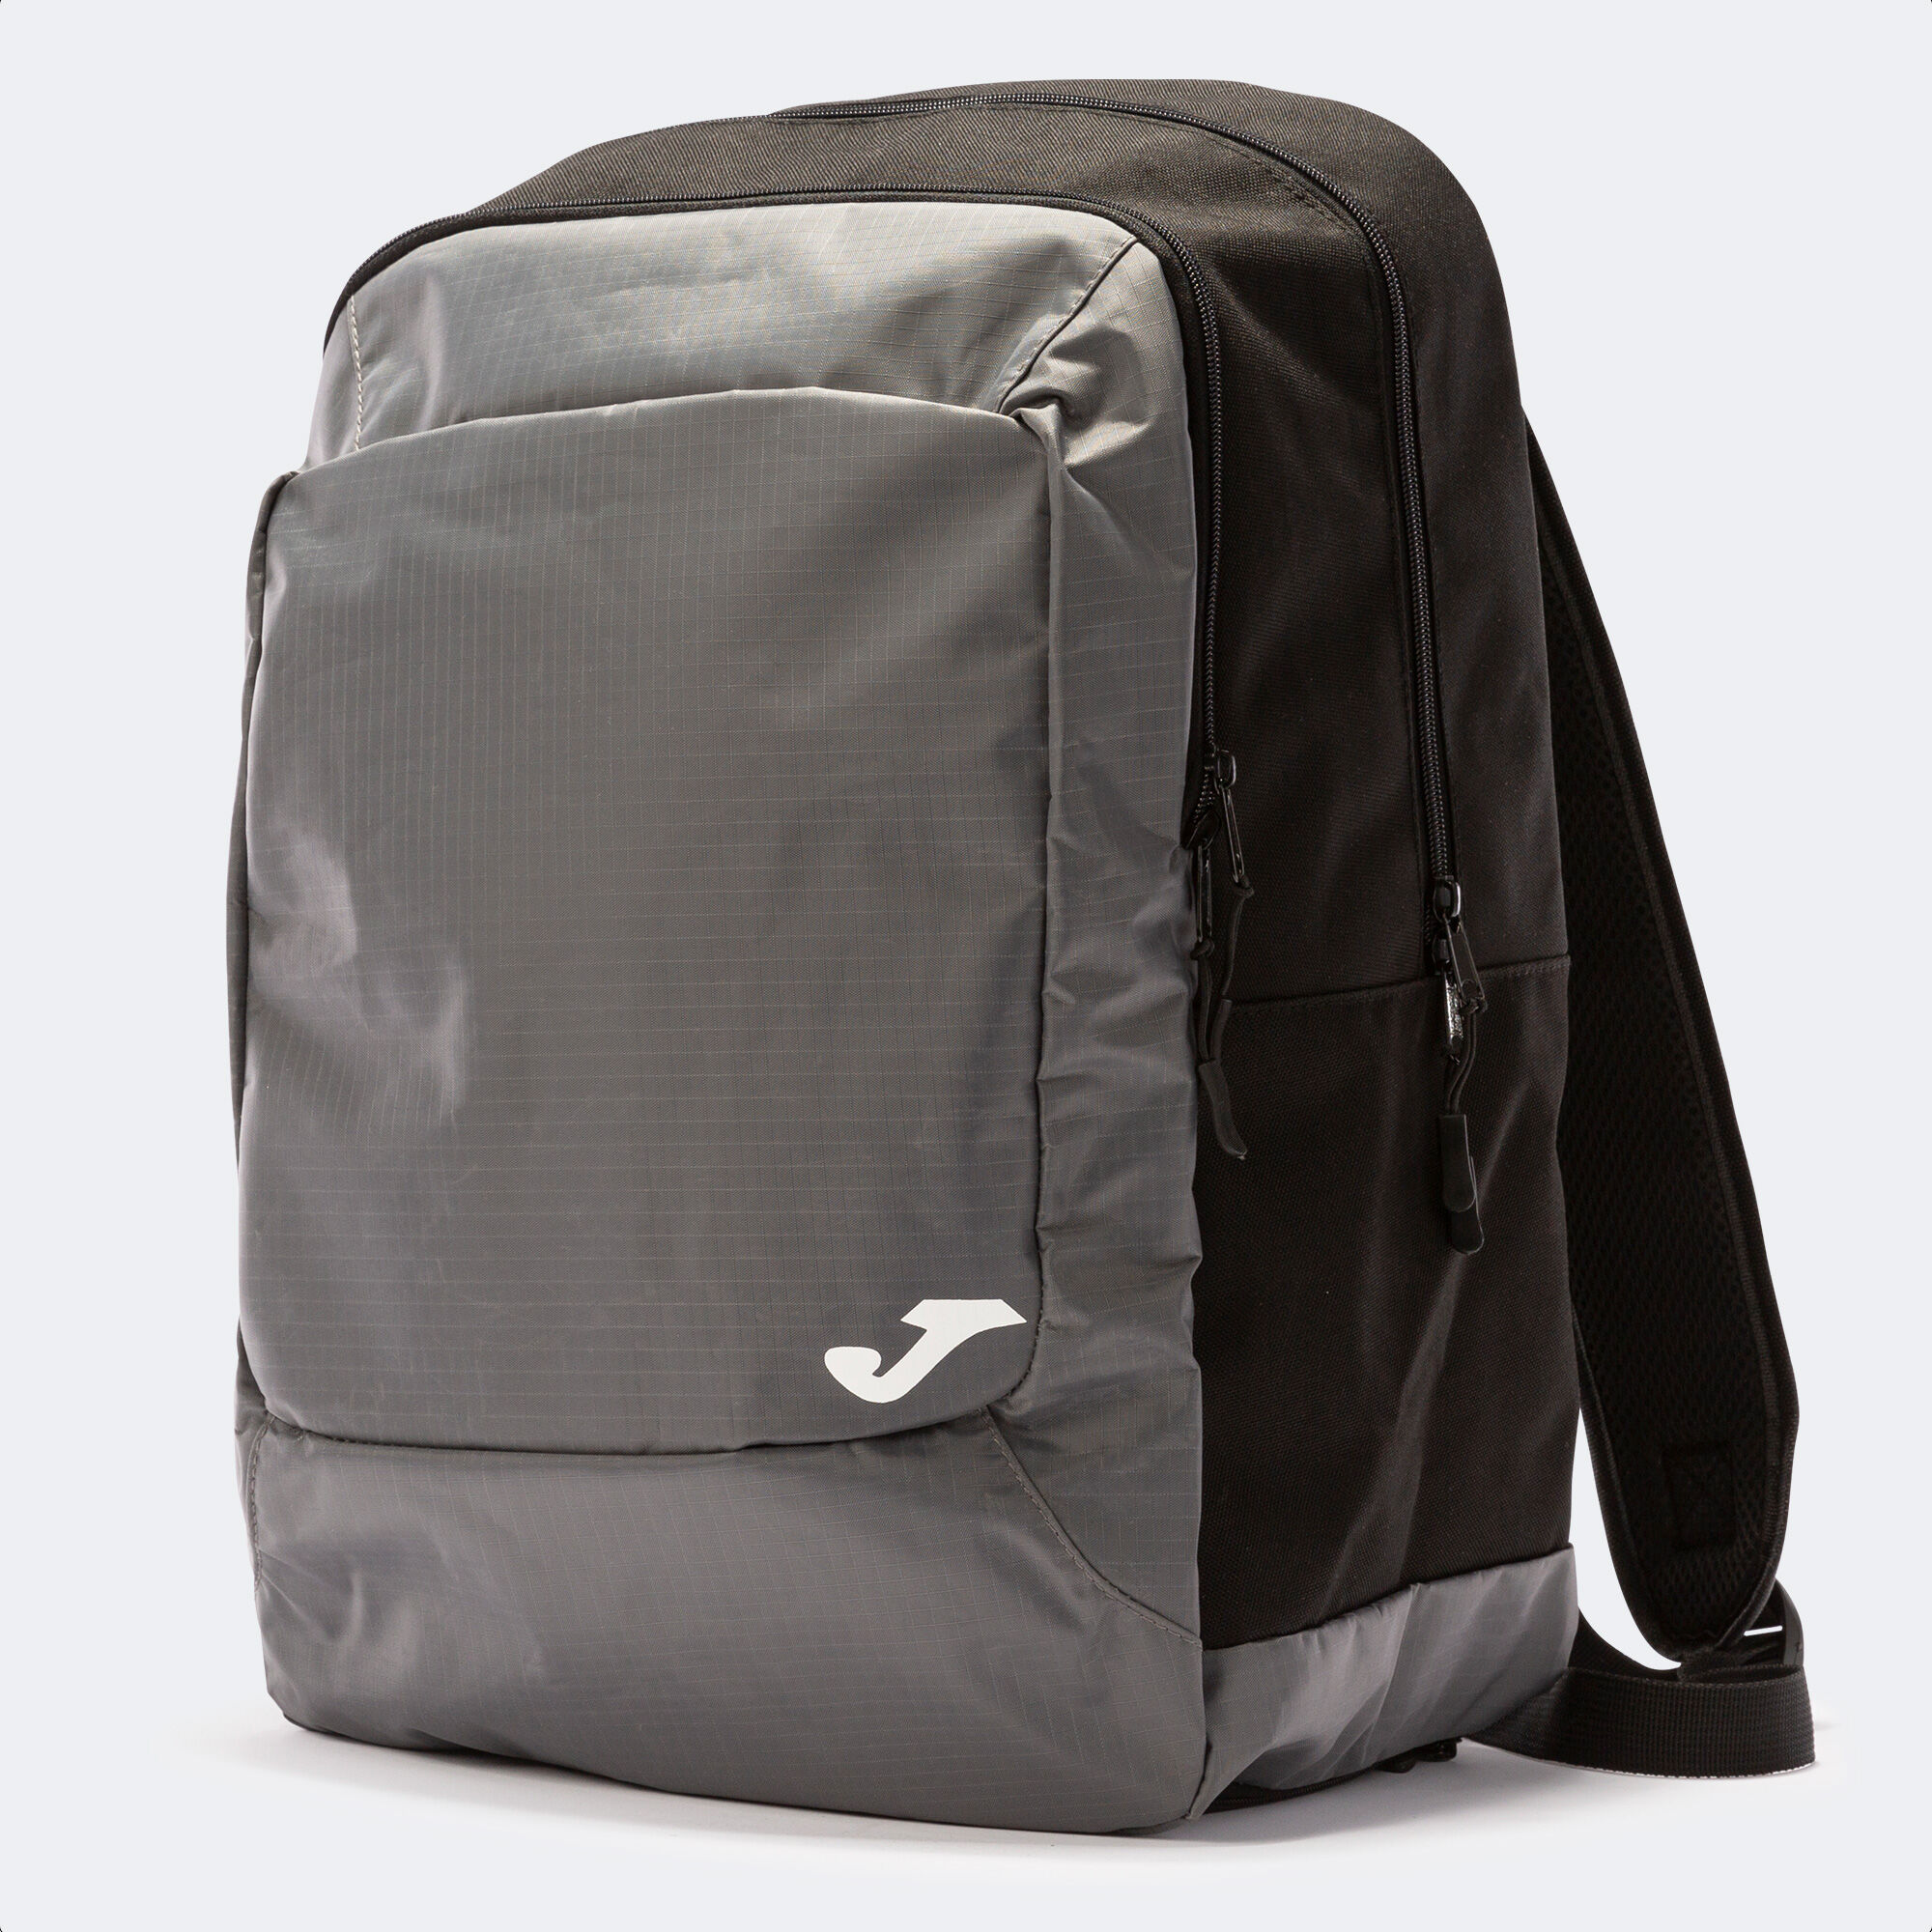 Backpack - shoe bag Team black dark gray